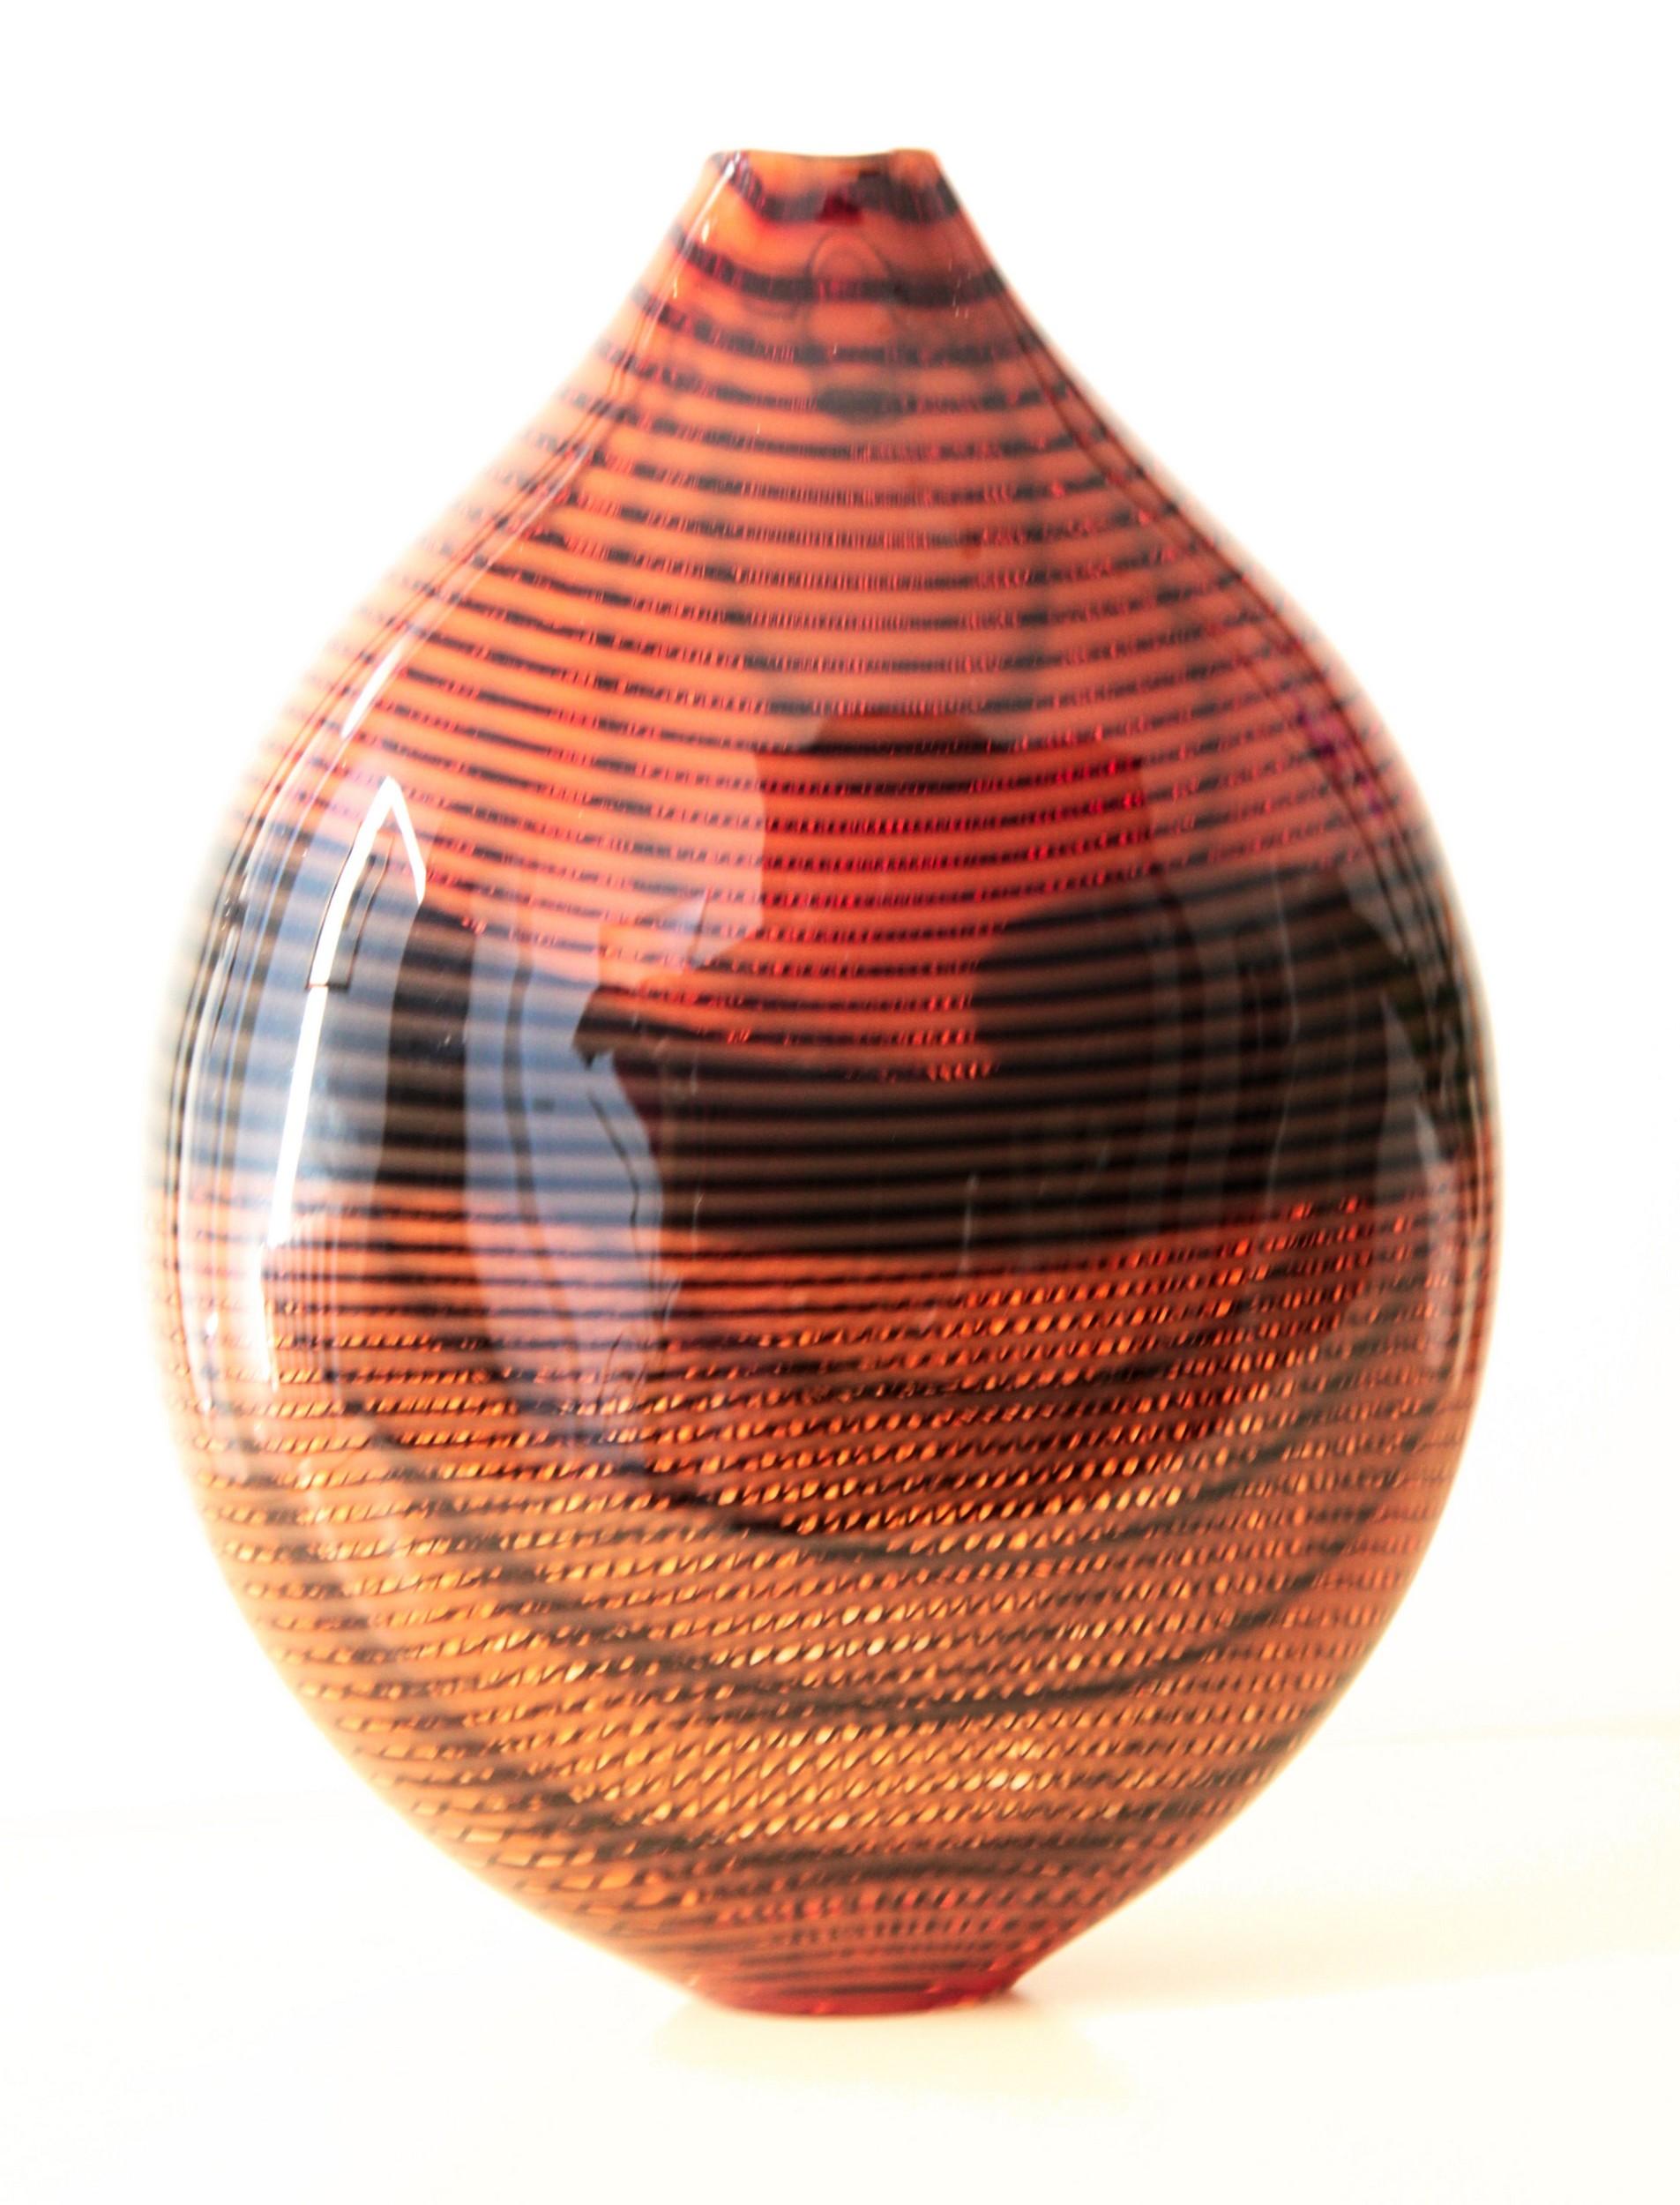 Lino Tagliapietra 2008, Burnt Orange and Black Smalto Vase, Signed 7